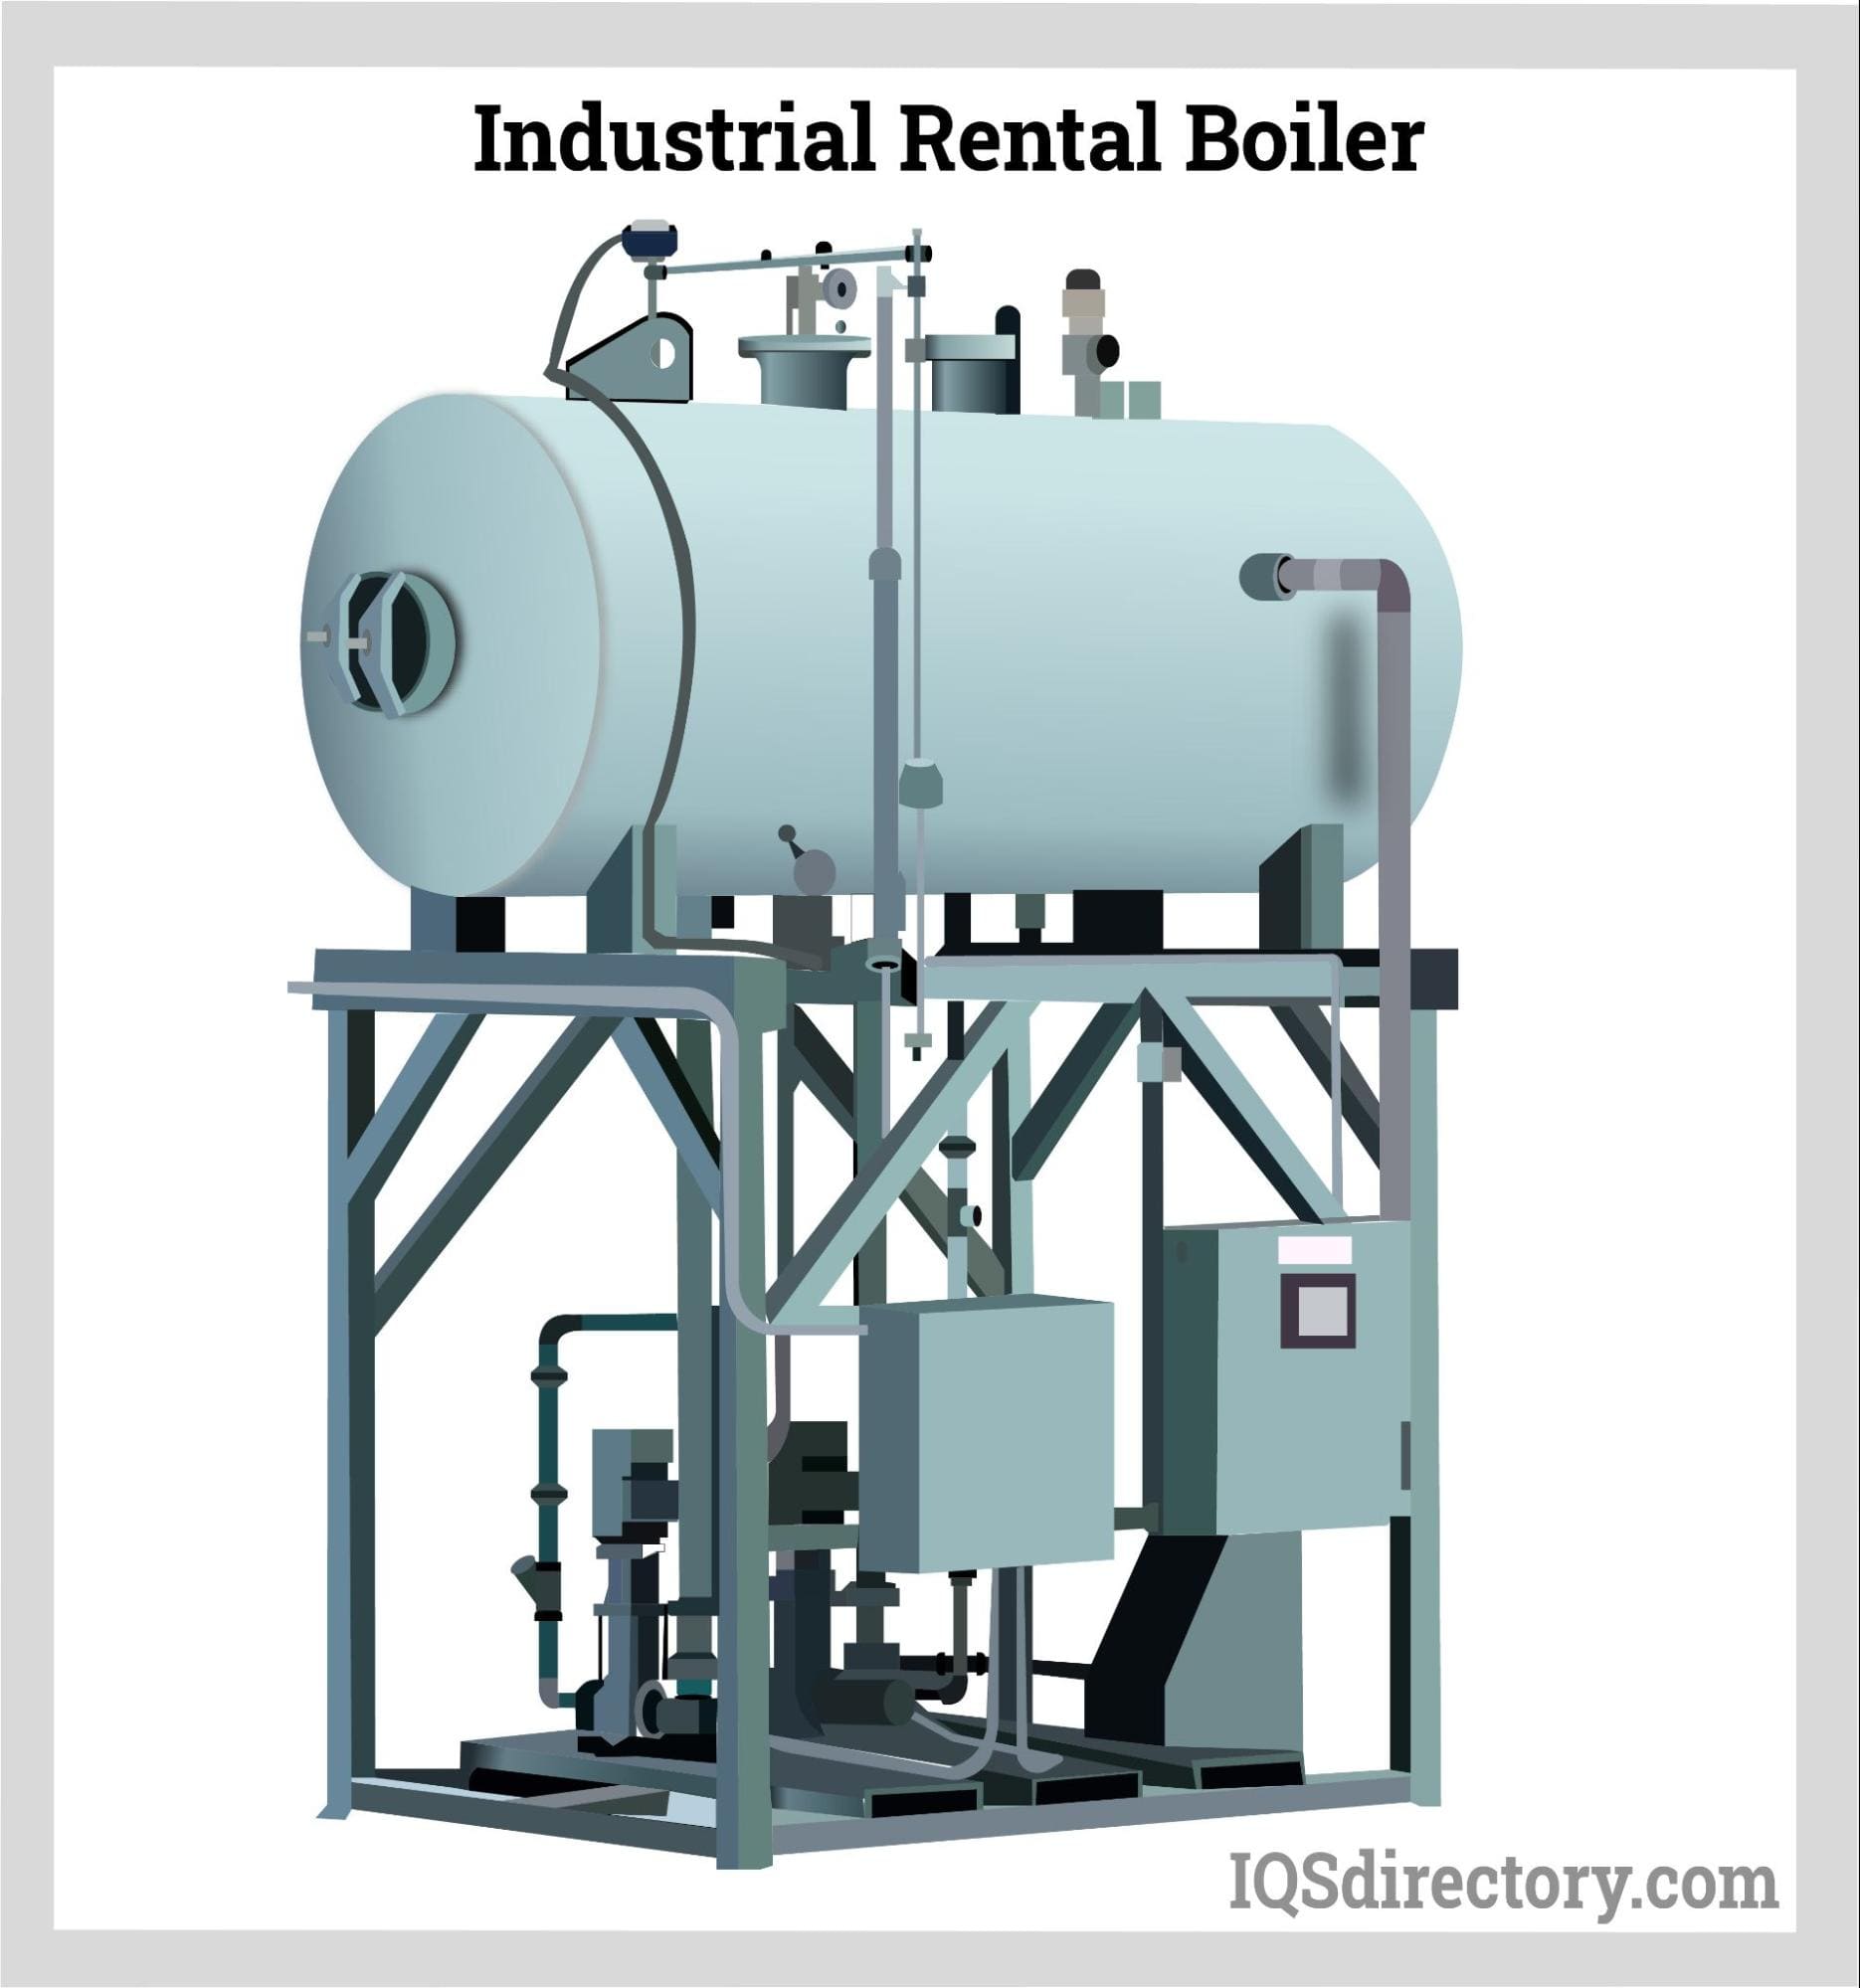 Boiler Rentals